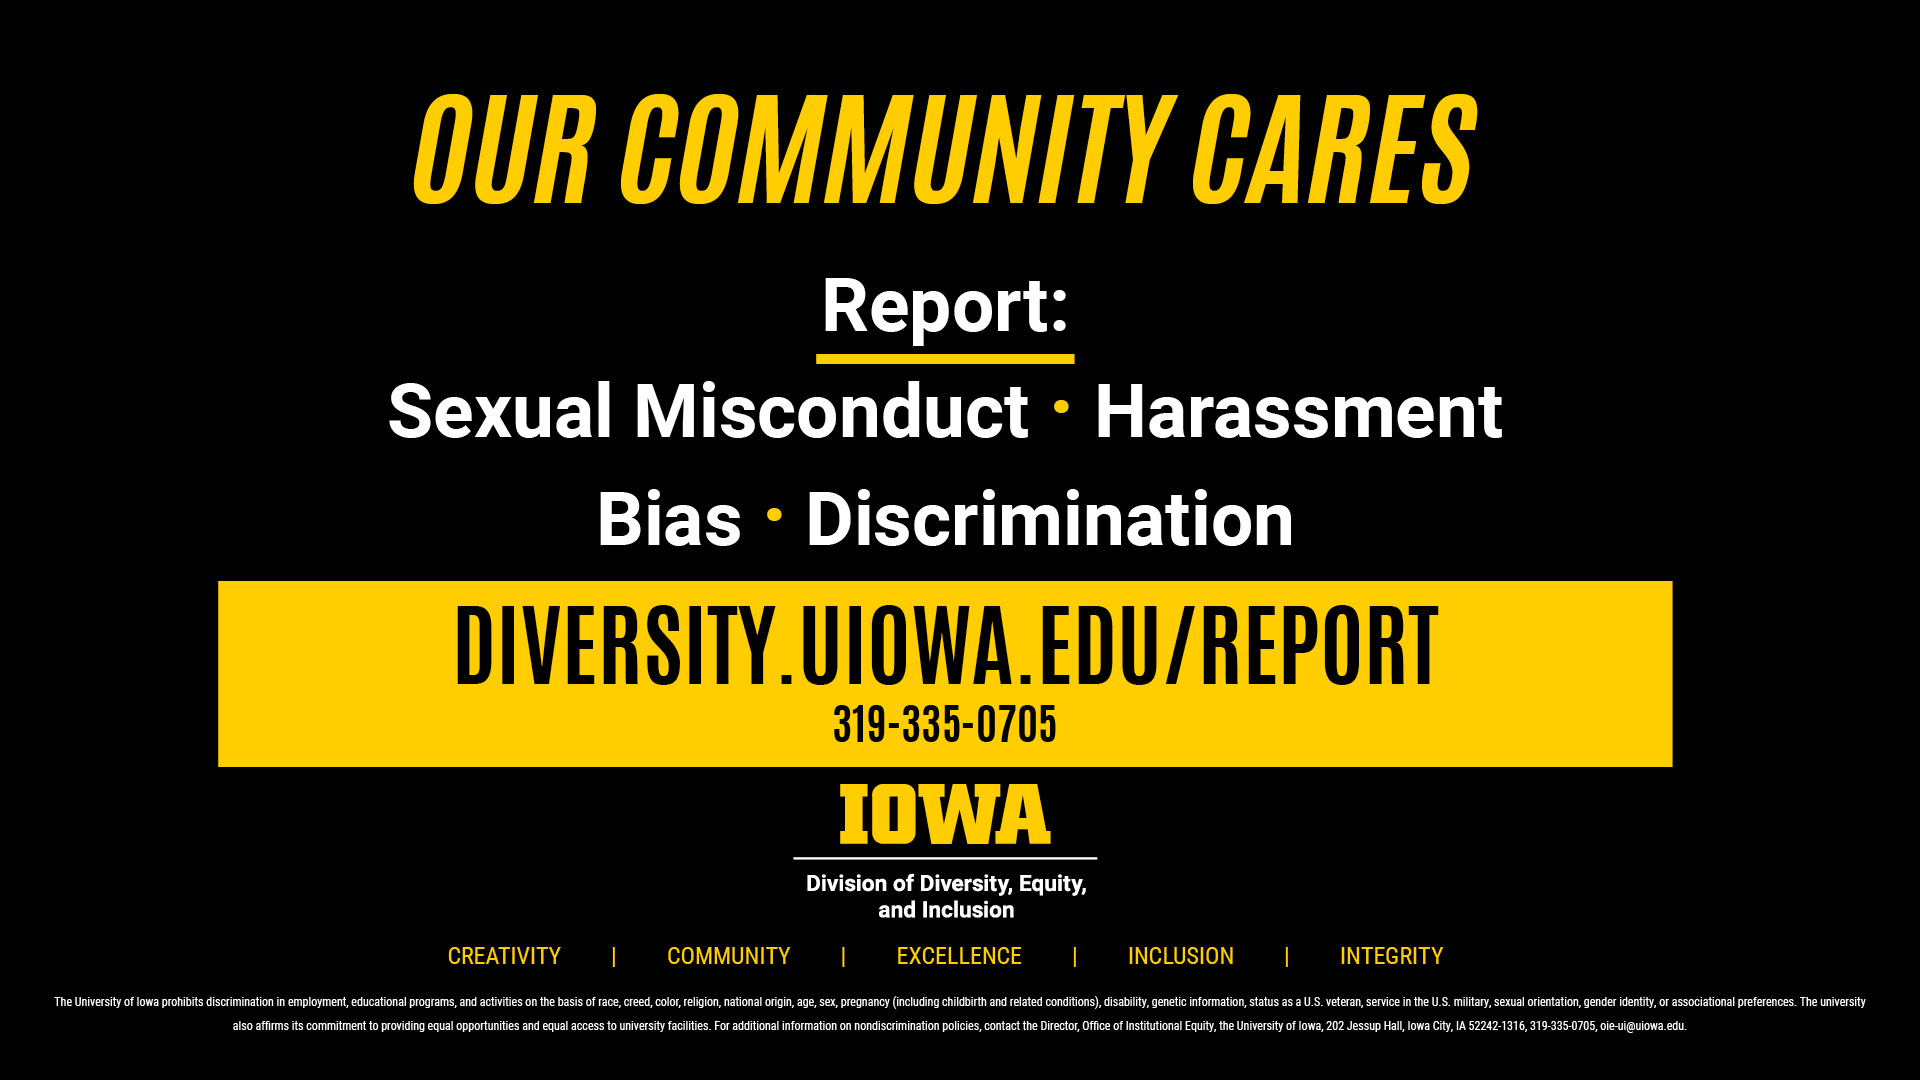 Our Community Cares, Report Sexual misconduct, harassment, bias, discrimination. Diversity.uiowa.edu/report or 319-335-0705 